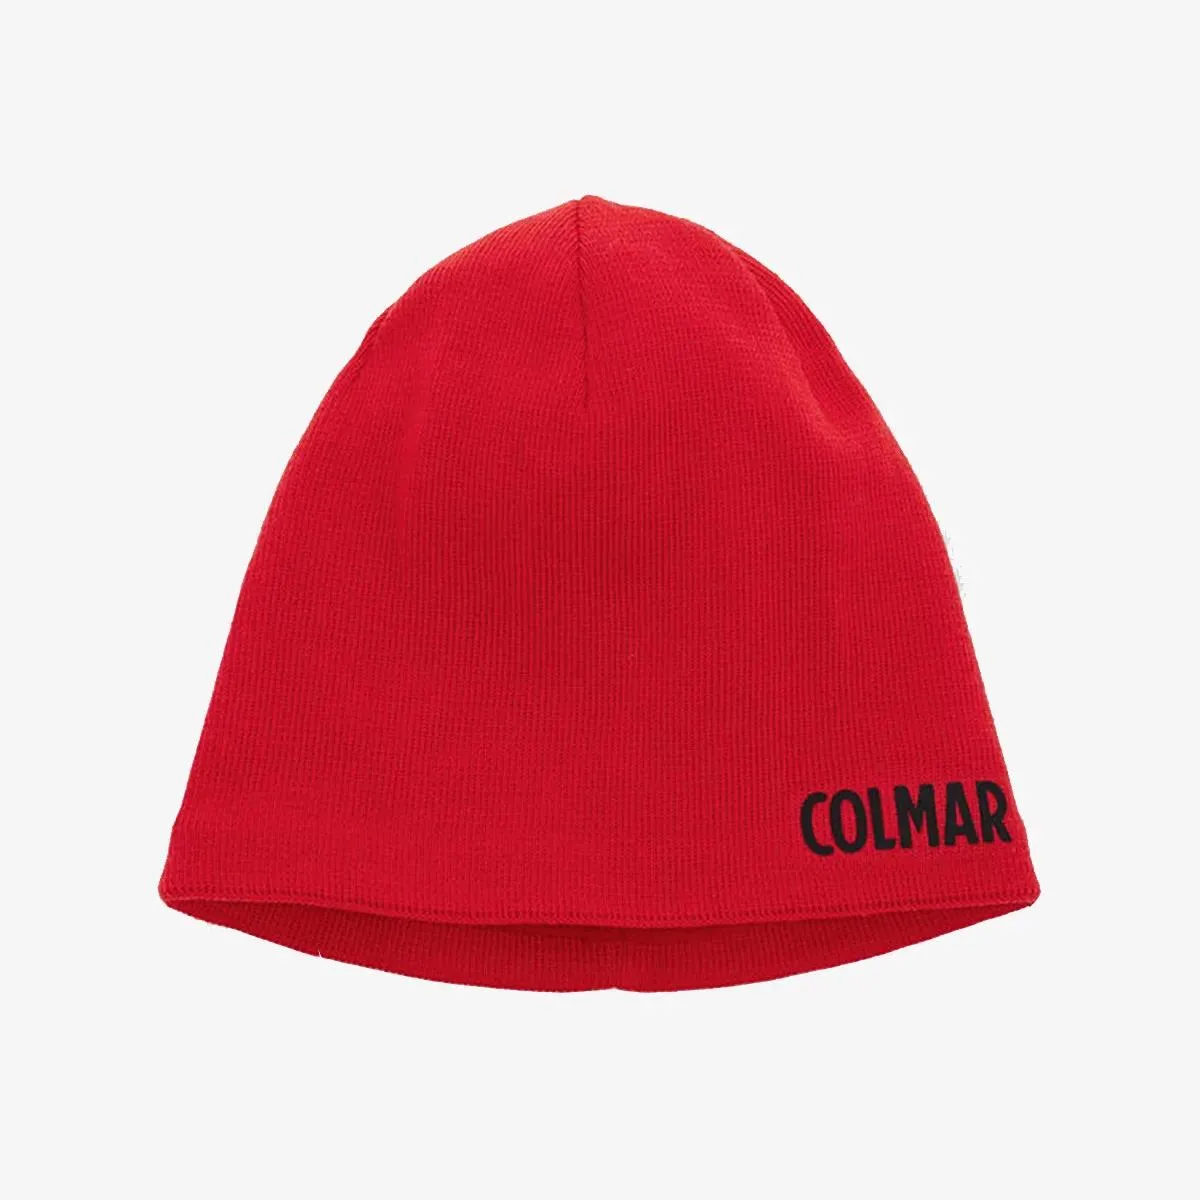 Colmar HAT 